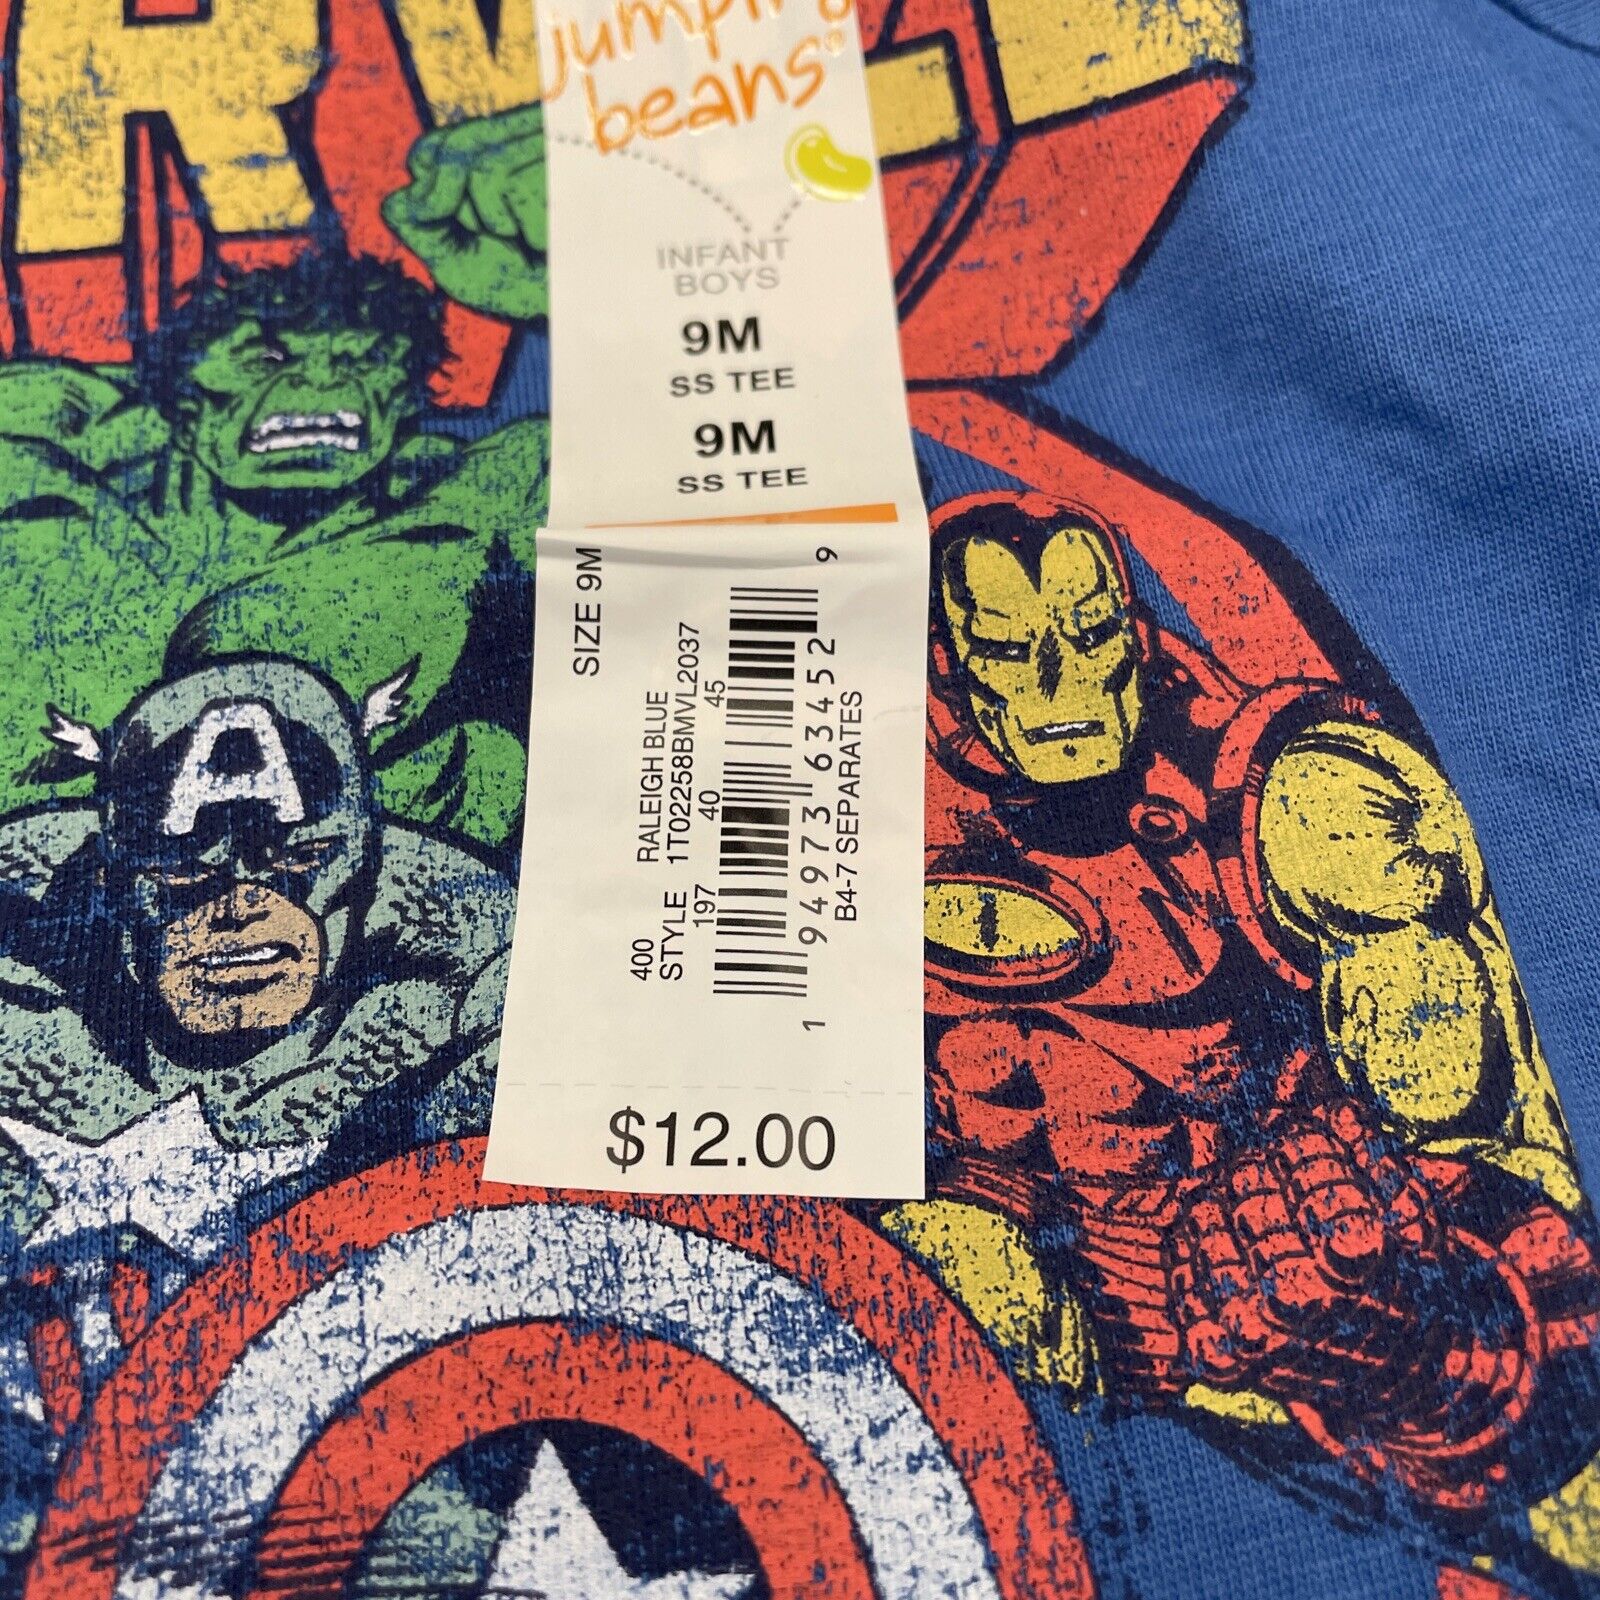 Jumping Beans Marvel Nwt Baby Boy 9M T-Shirt Spider Man Iron Man Captain America Hulk Clothes, Infant Boy's, Blue